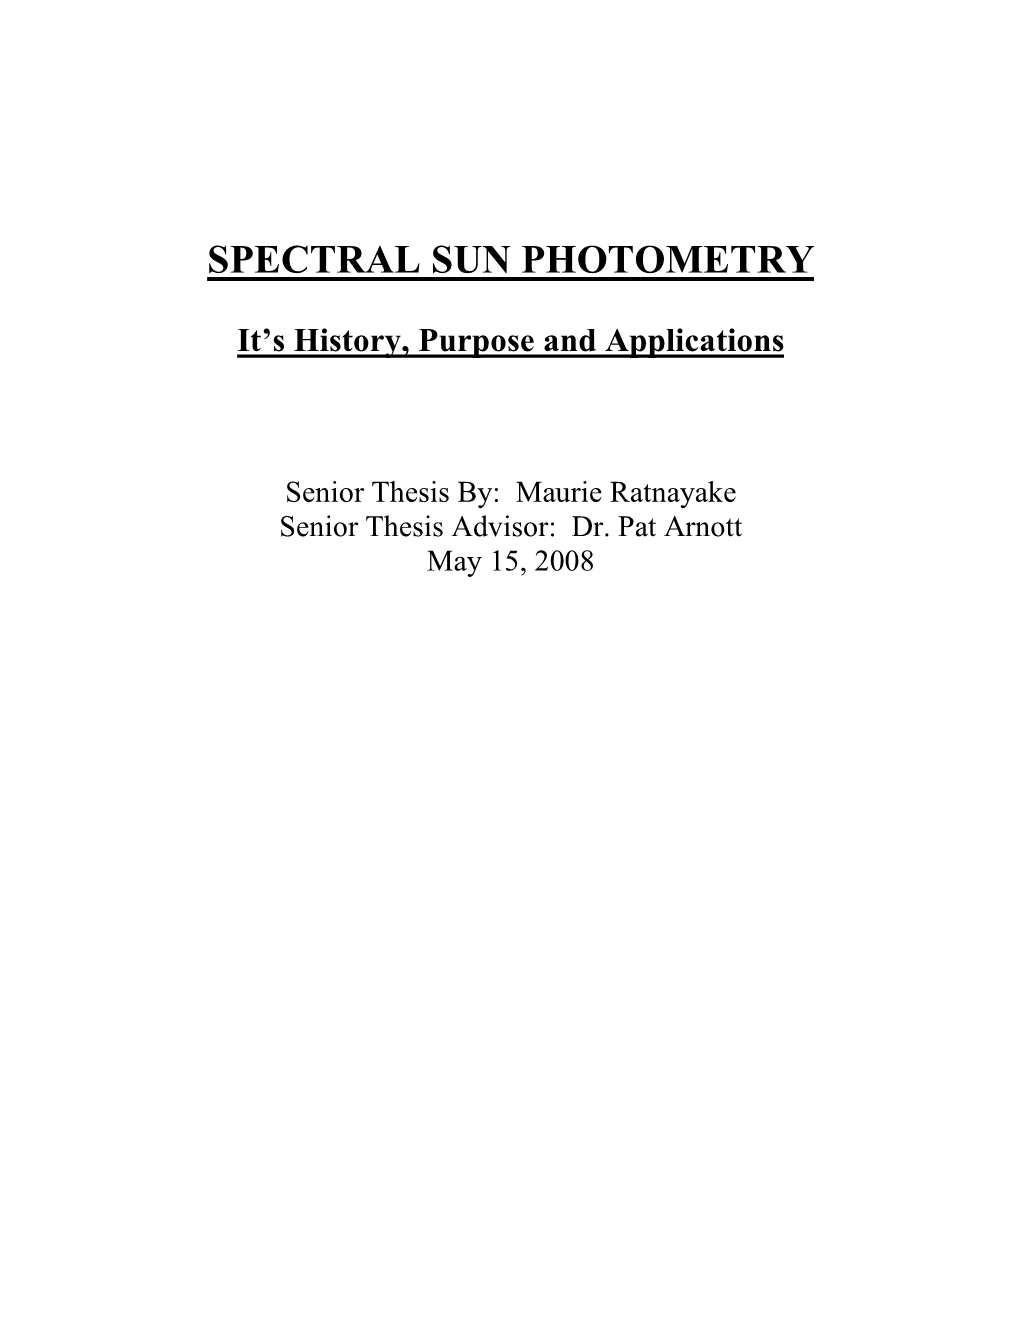 Senior Thesis--Spectral Sun Photometry-1